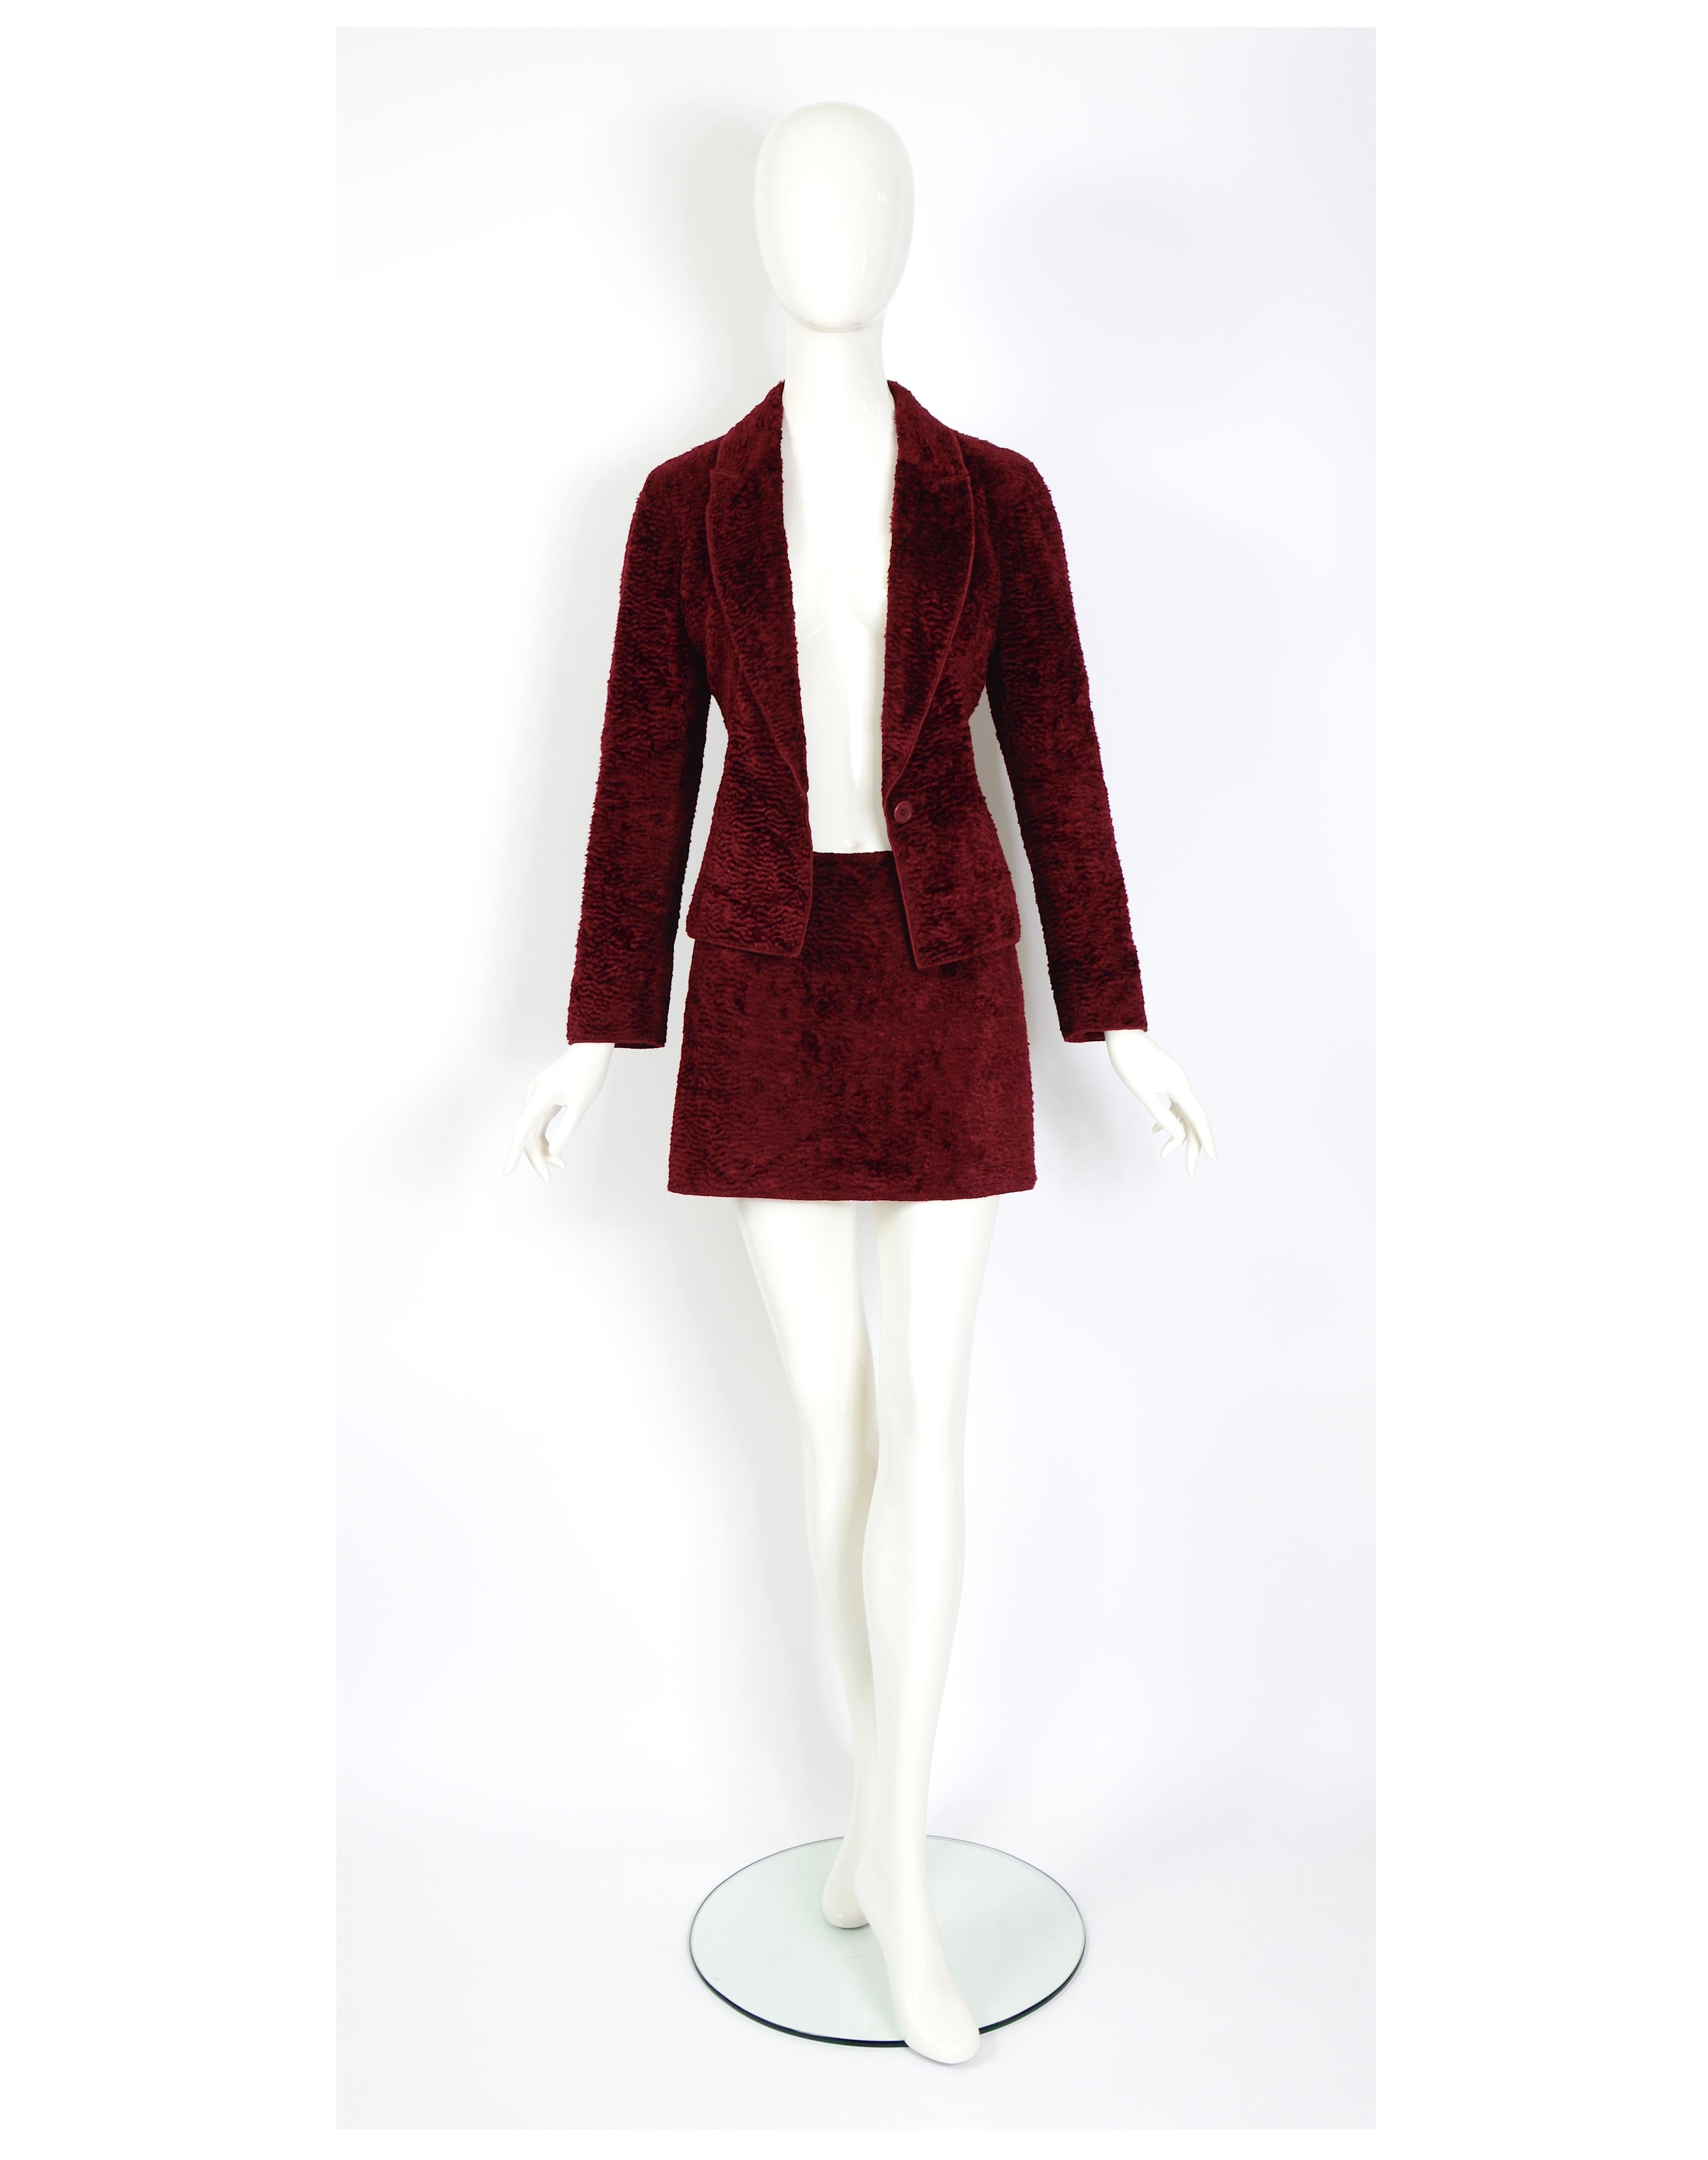 Ozbek by Rifat Ozbek vintage 90s burgundy cotton faux fur astrakhan suit For Sale 3